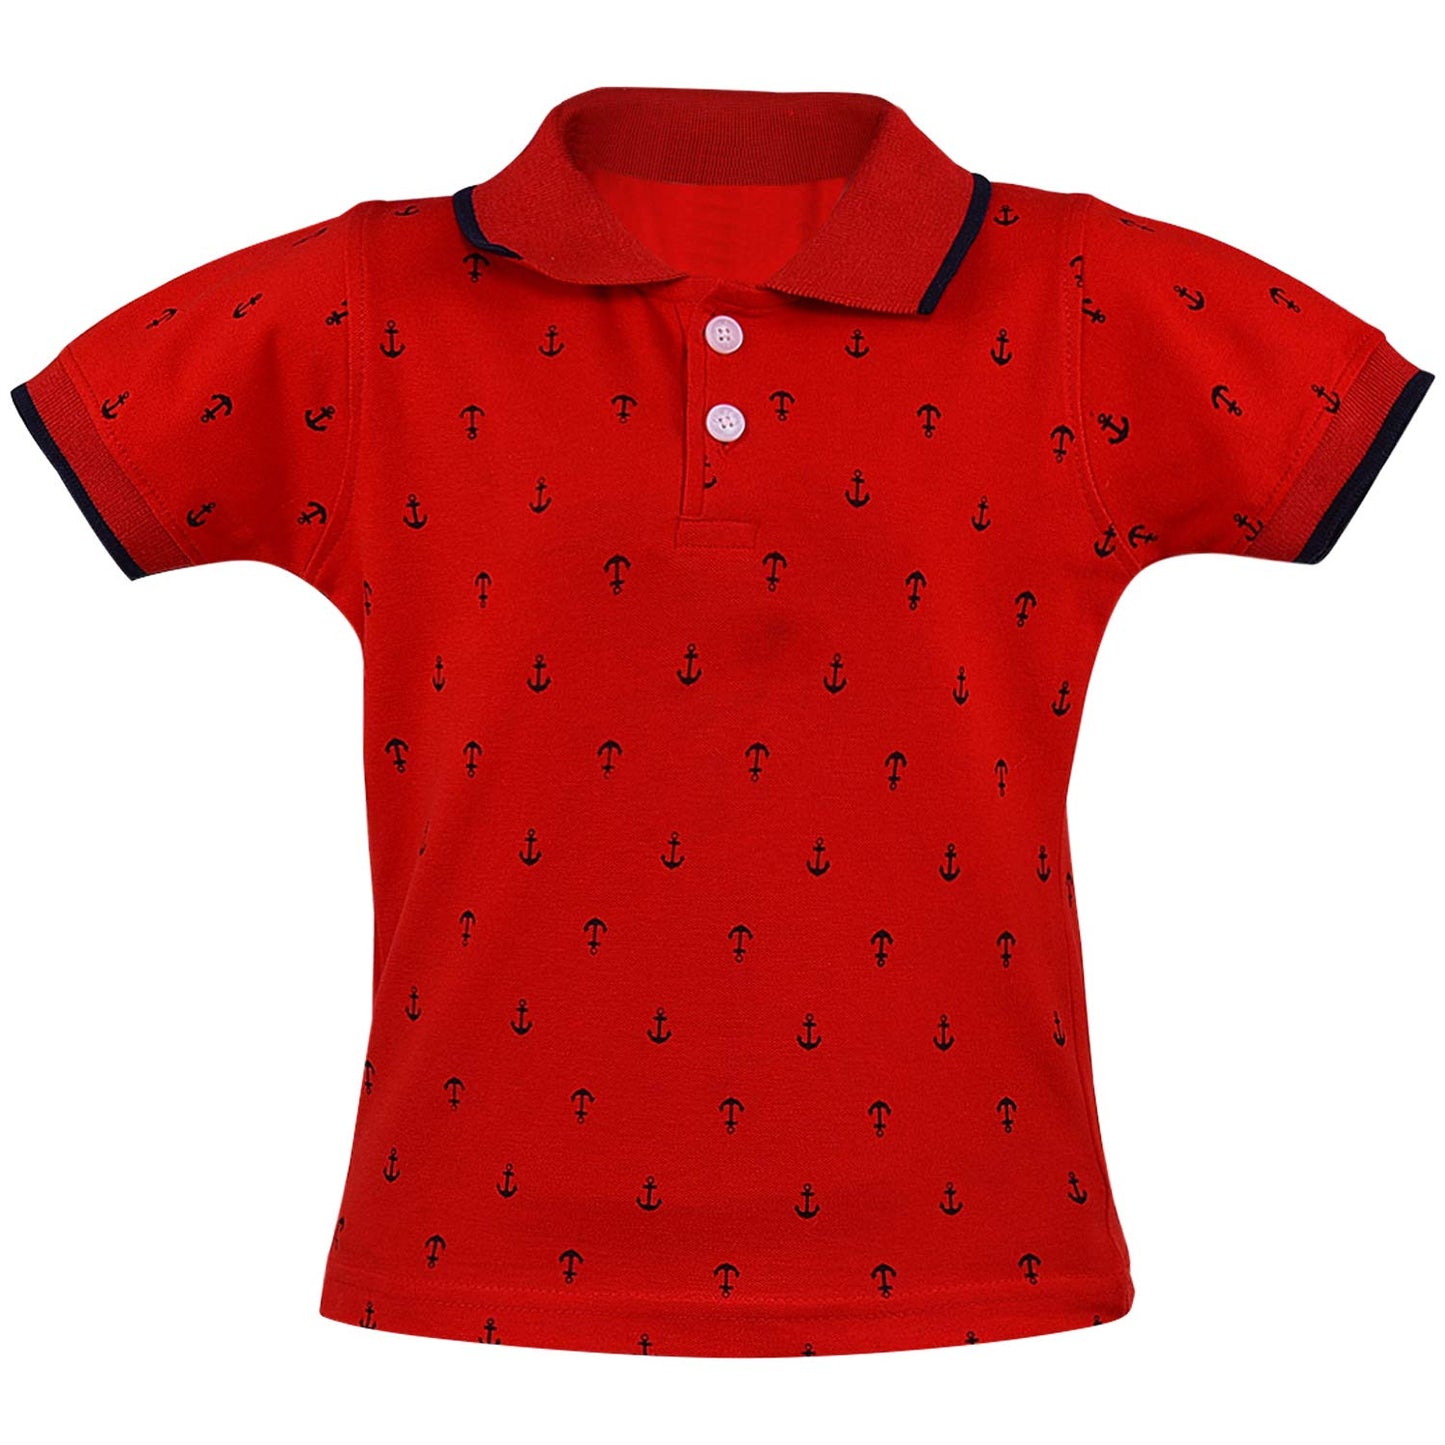 Wish Karo Unisex T-shirts-Shorts for Baby Boys- Girls Clothing Sets-(bt67rd)